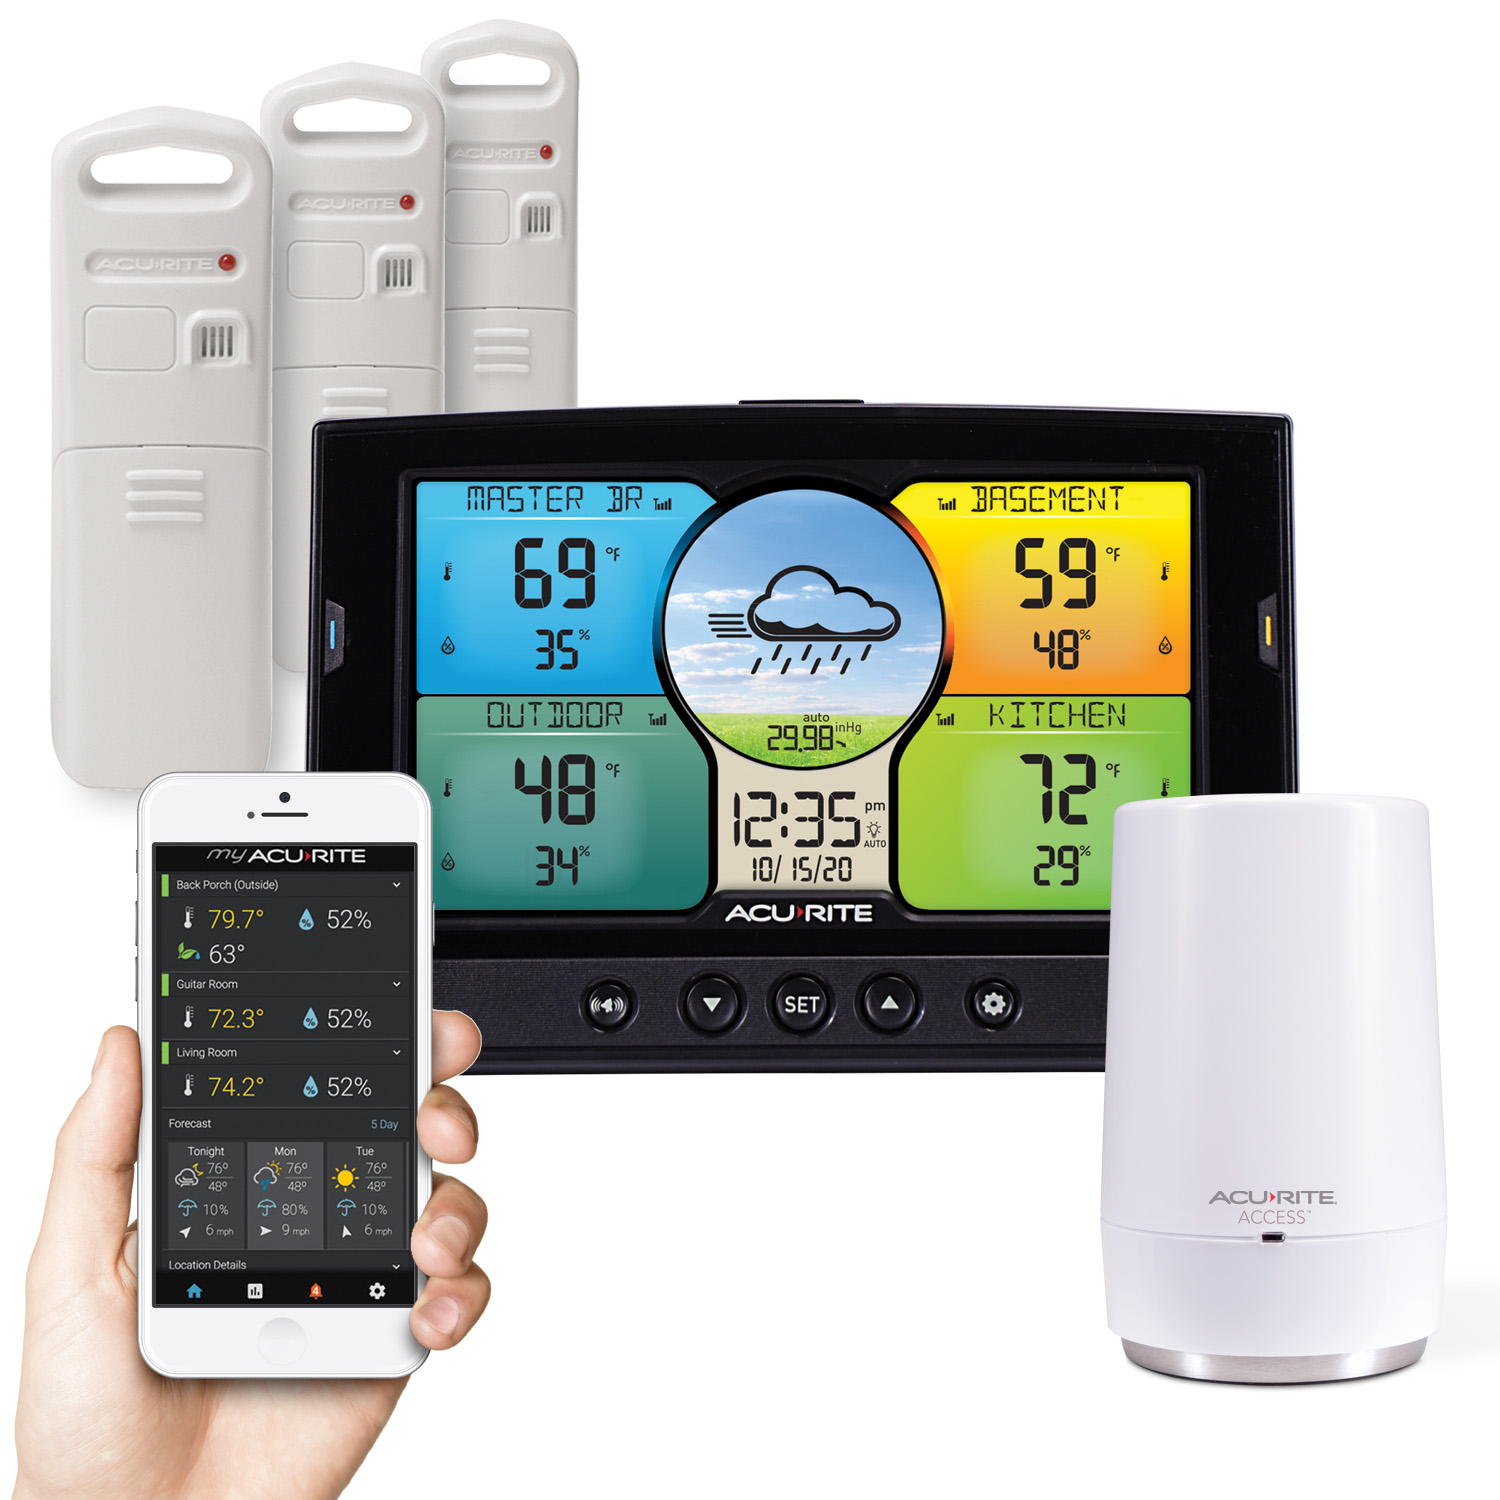 AcuRite multi-sensor home monitoring